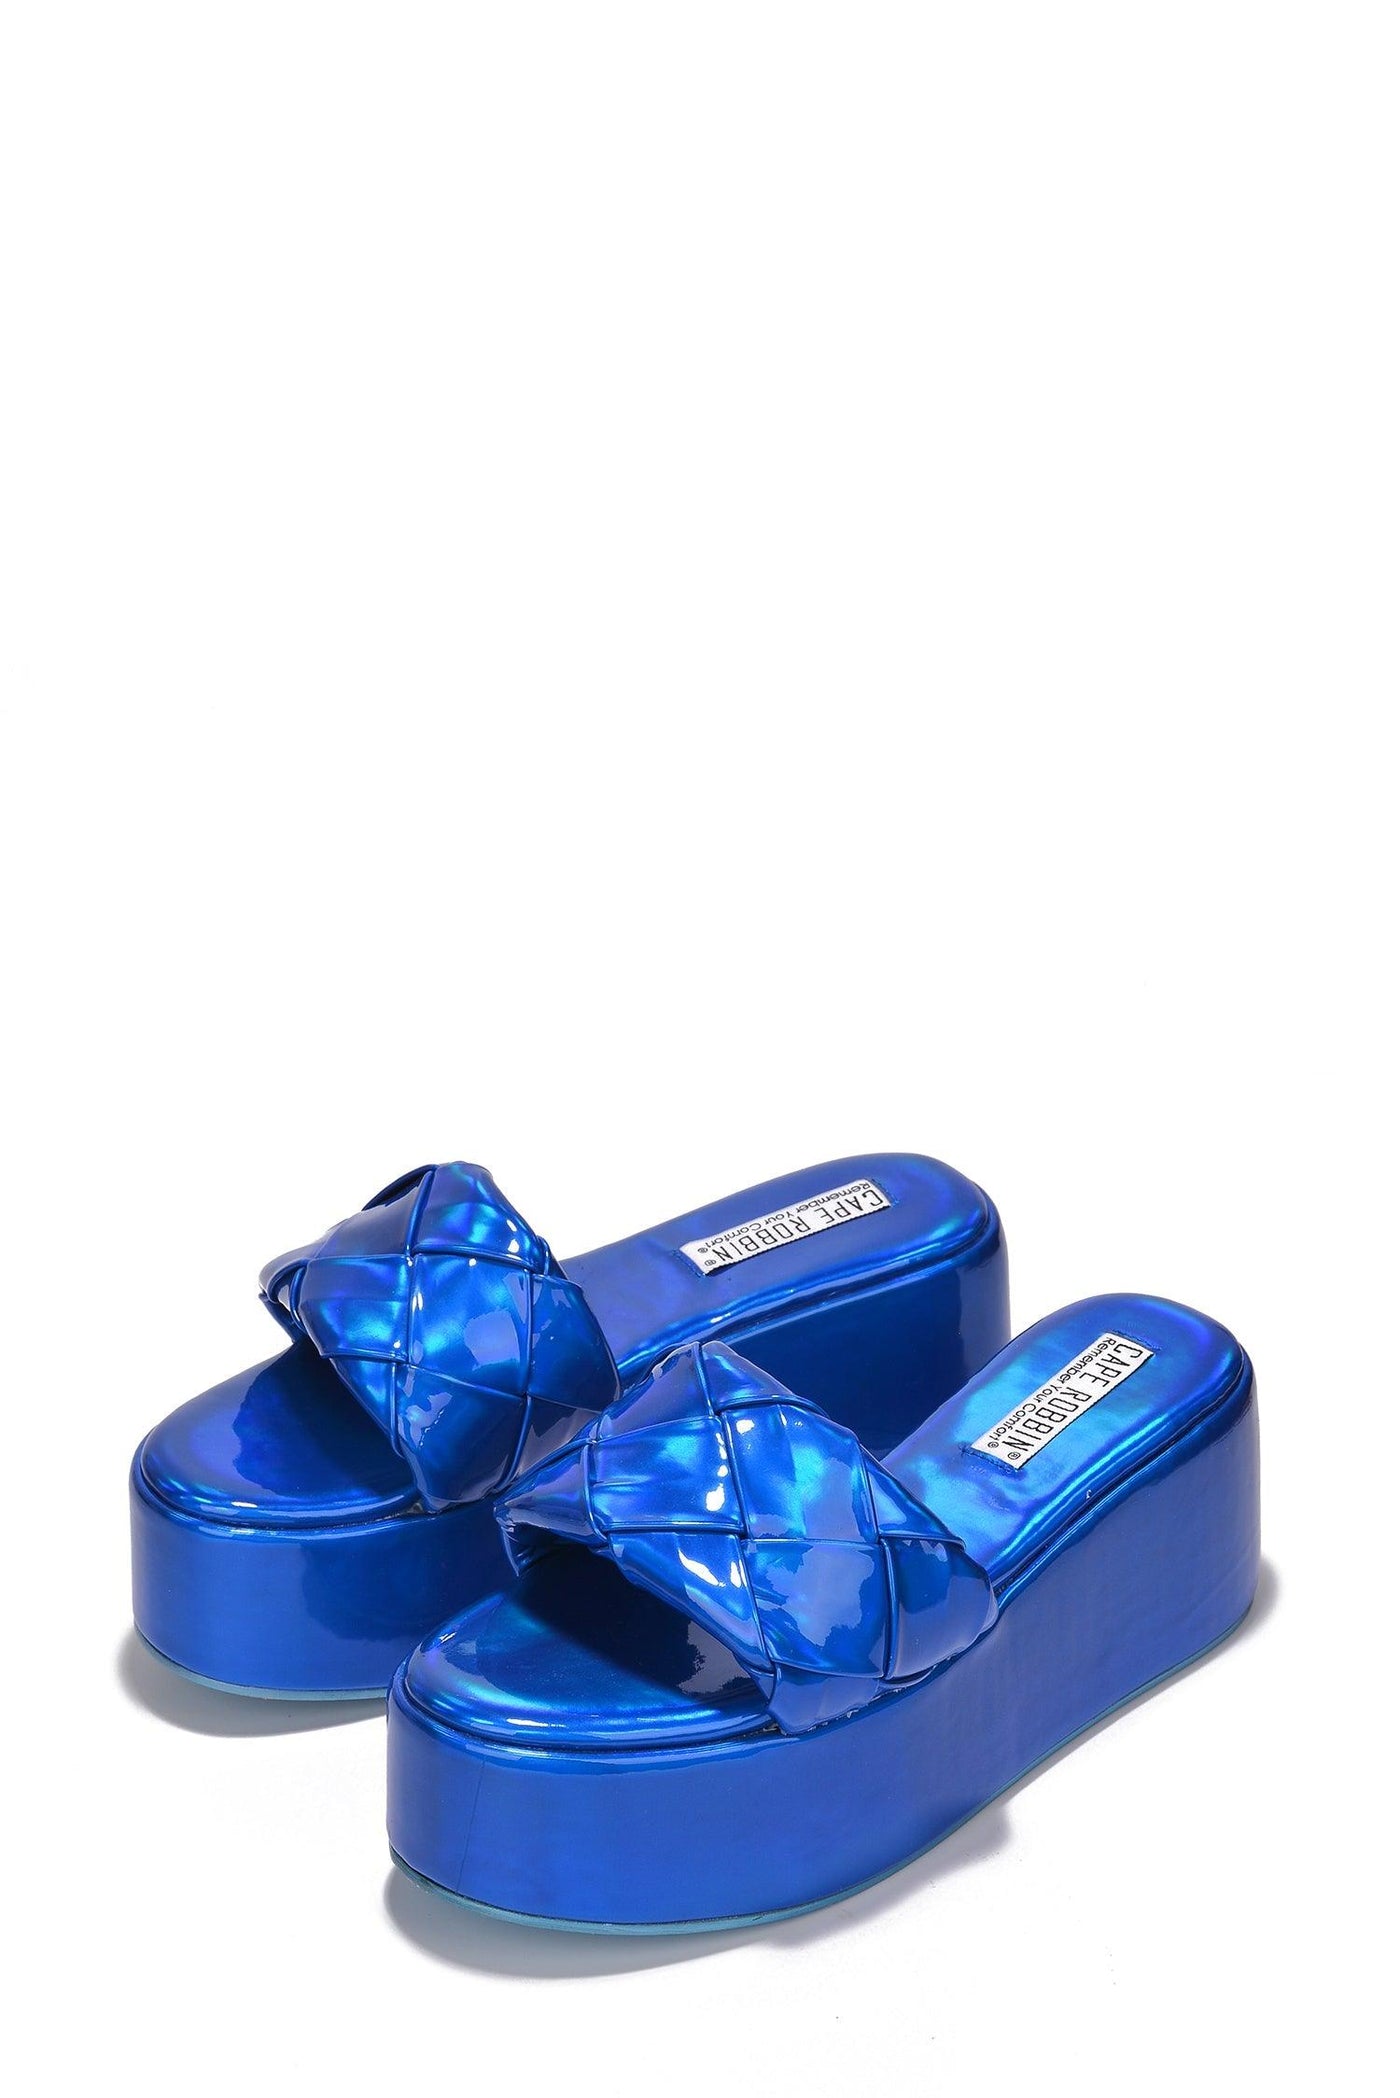 ANONA - BLUE - AMIClubwear